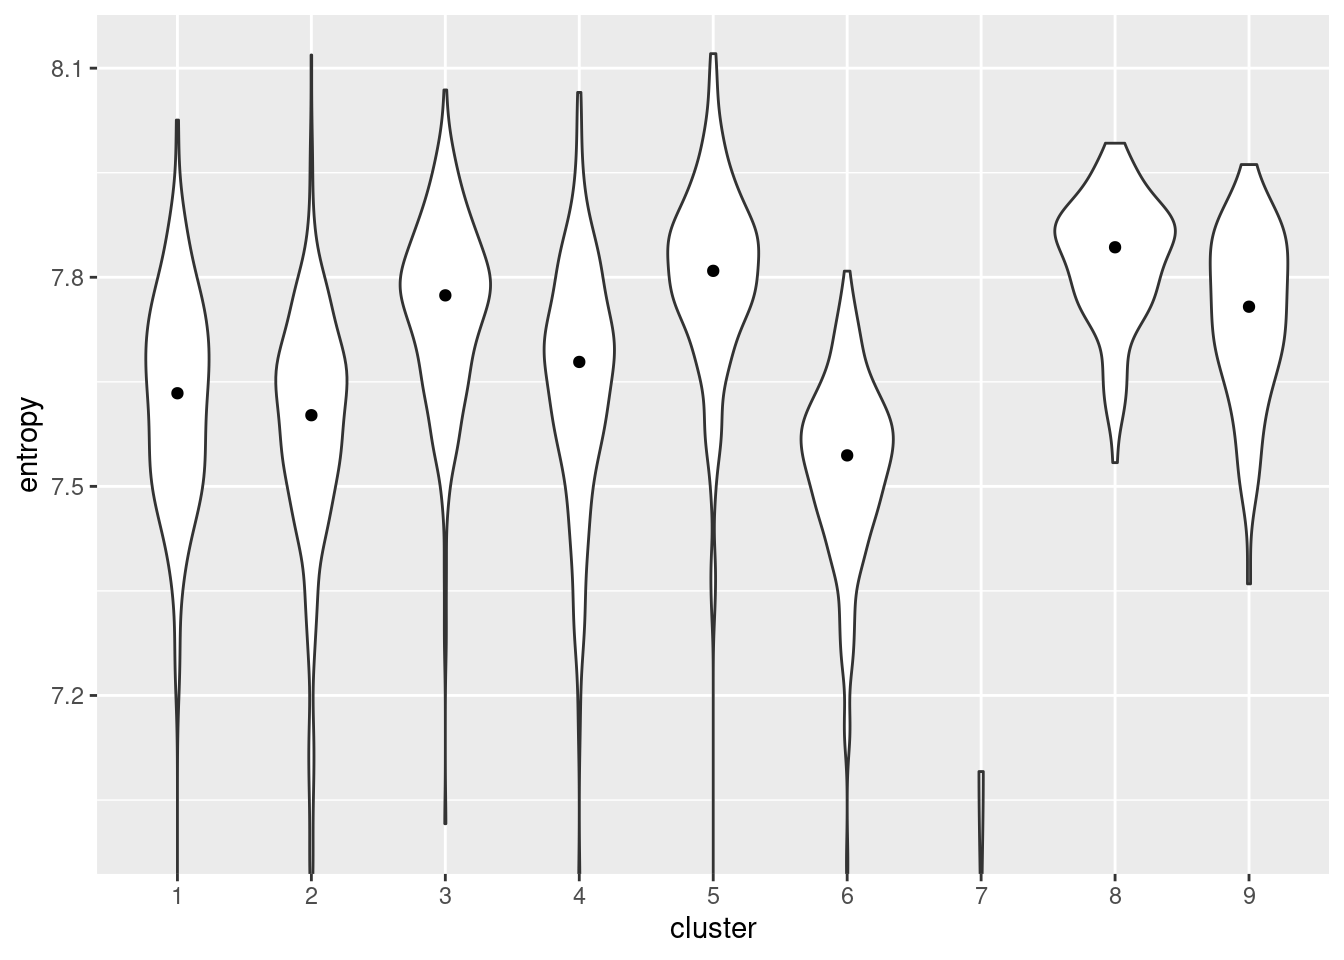 Distribution of per-cell entropies for each cluster in the Nestorowa dataset. The median entropy for each cluster is shown as a point in the violin plot.